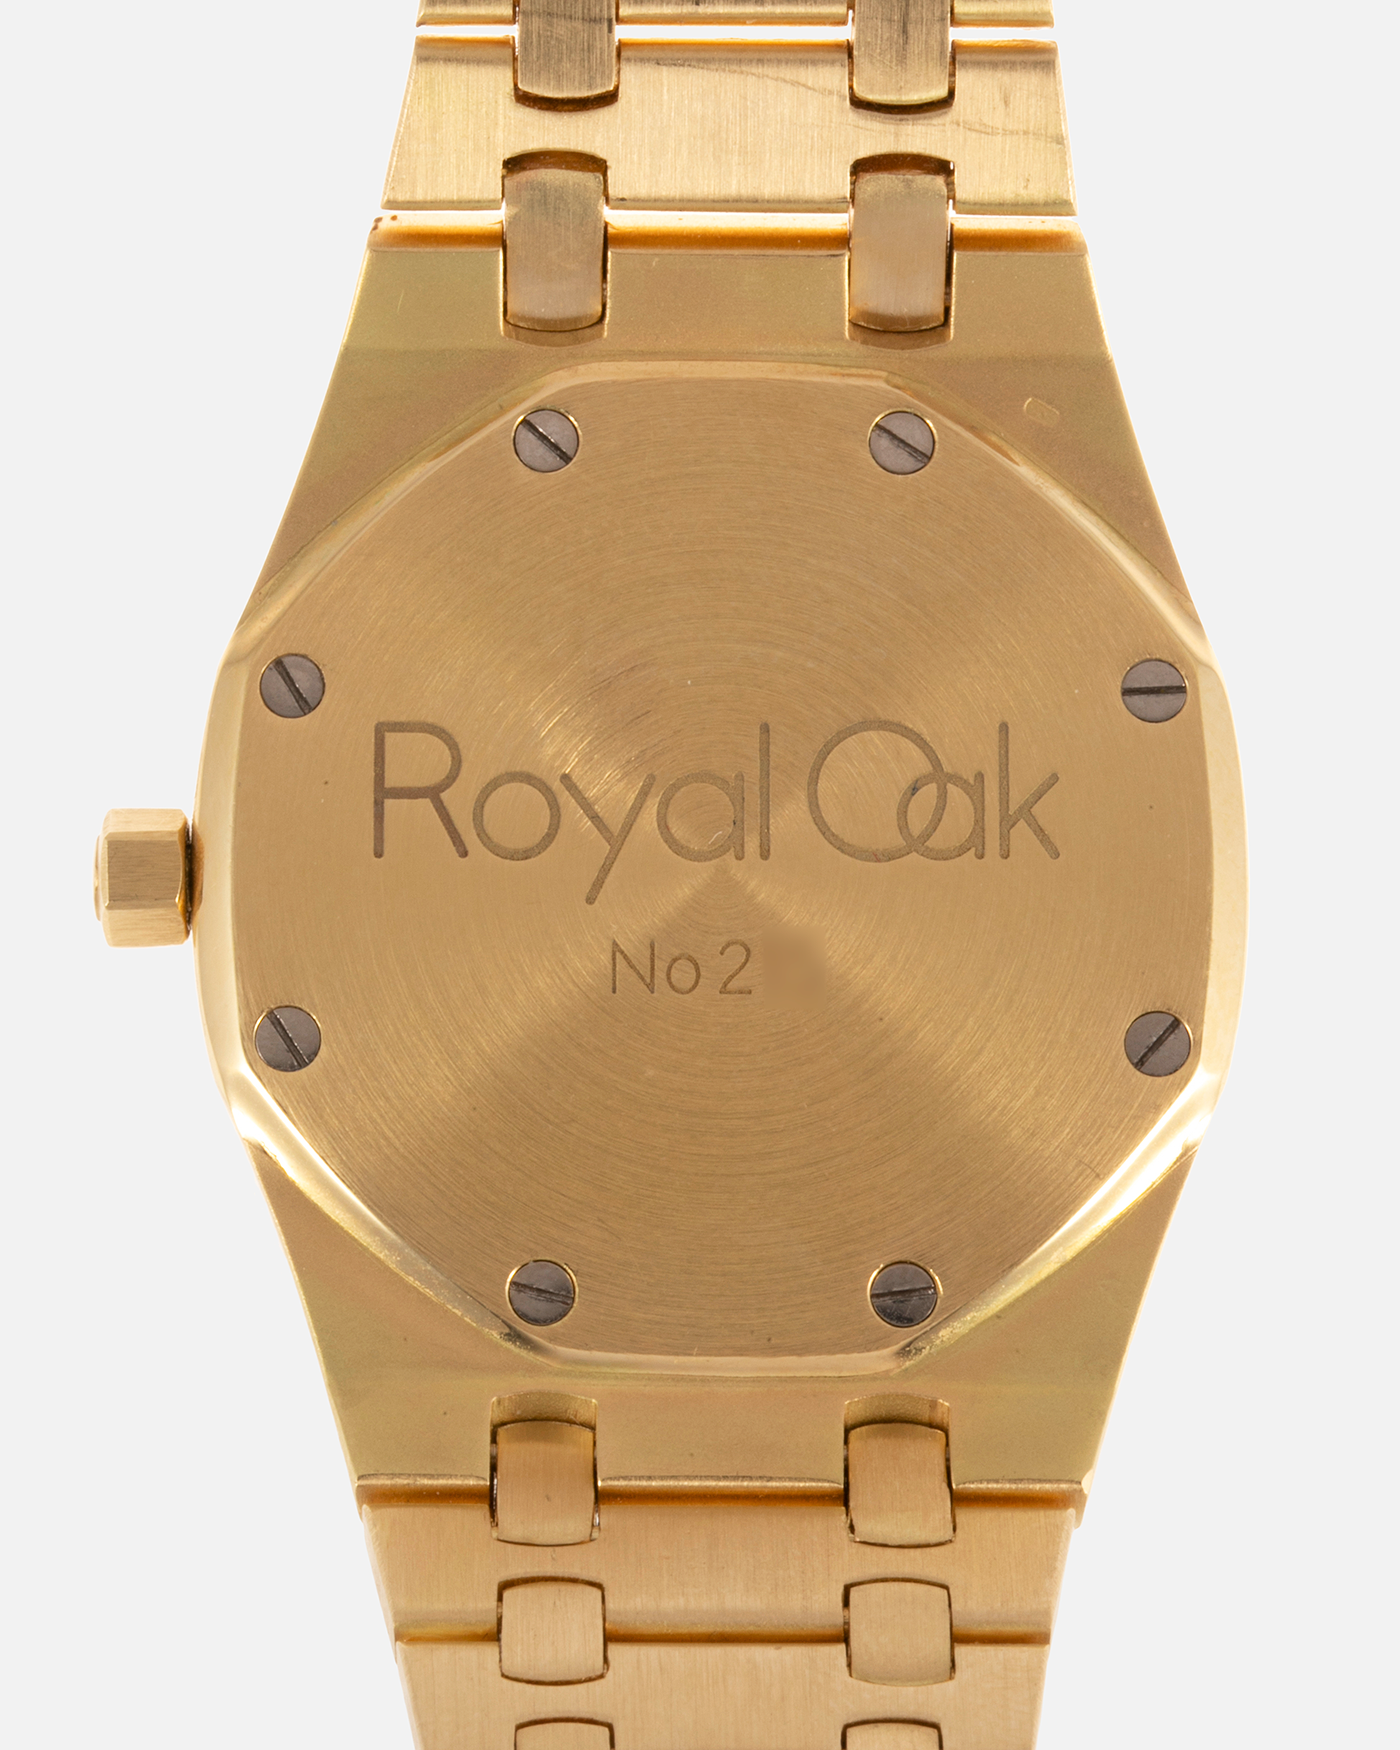 Brand: Audemars Piguet Year: 1980’s Model: Royal Oak Reference Number: 5402BA Material: 18-carat Yellow Gold Movement: Cal 2121 Case Diameter: 39mm Bracelet: Audemars Piguet Integrated 18-carat Yellow Gold Bracelet